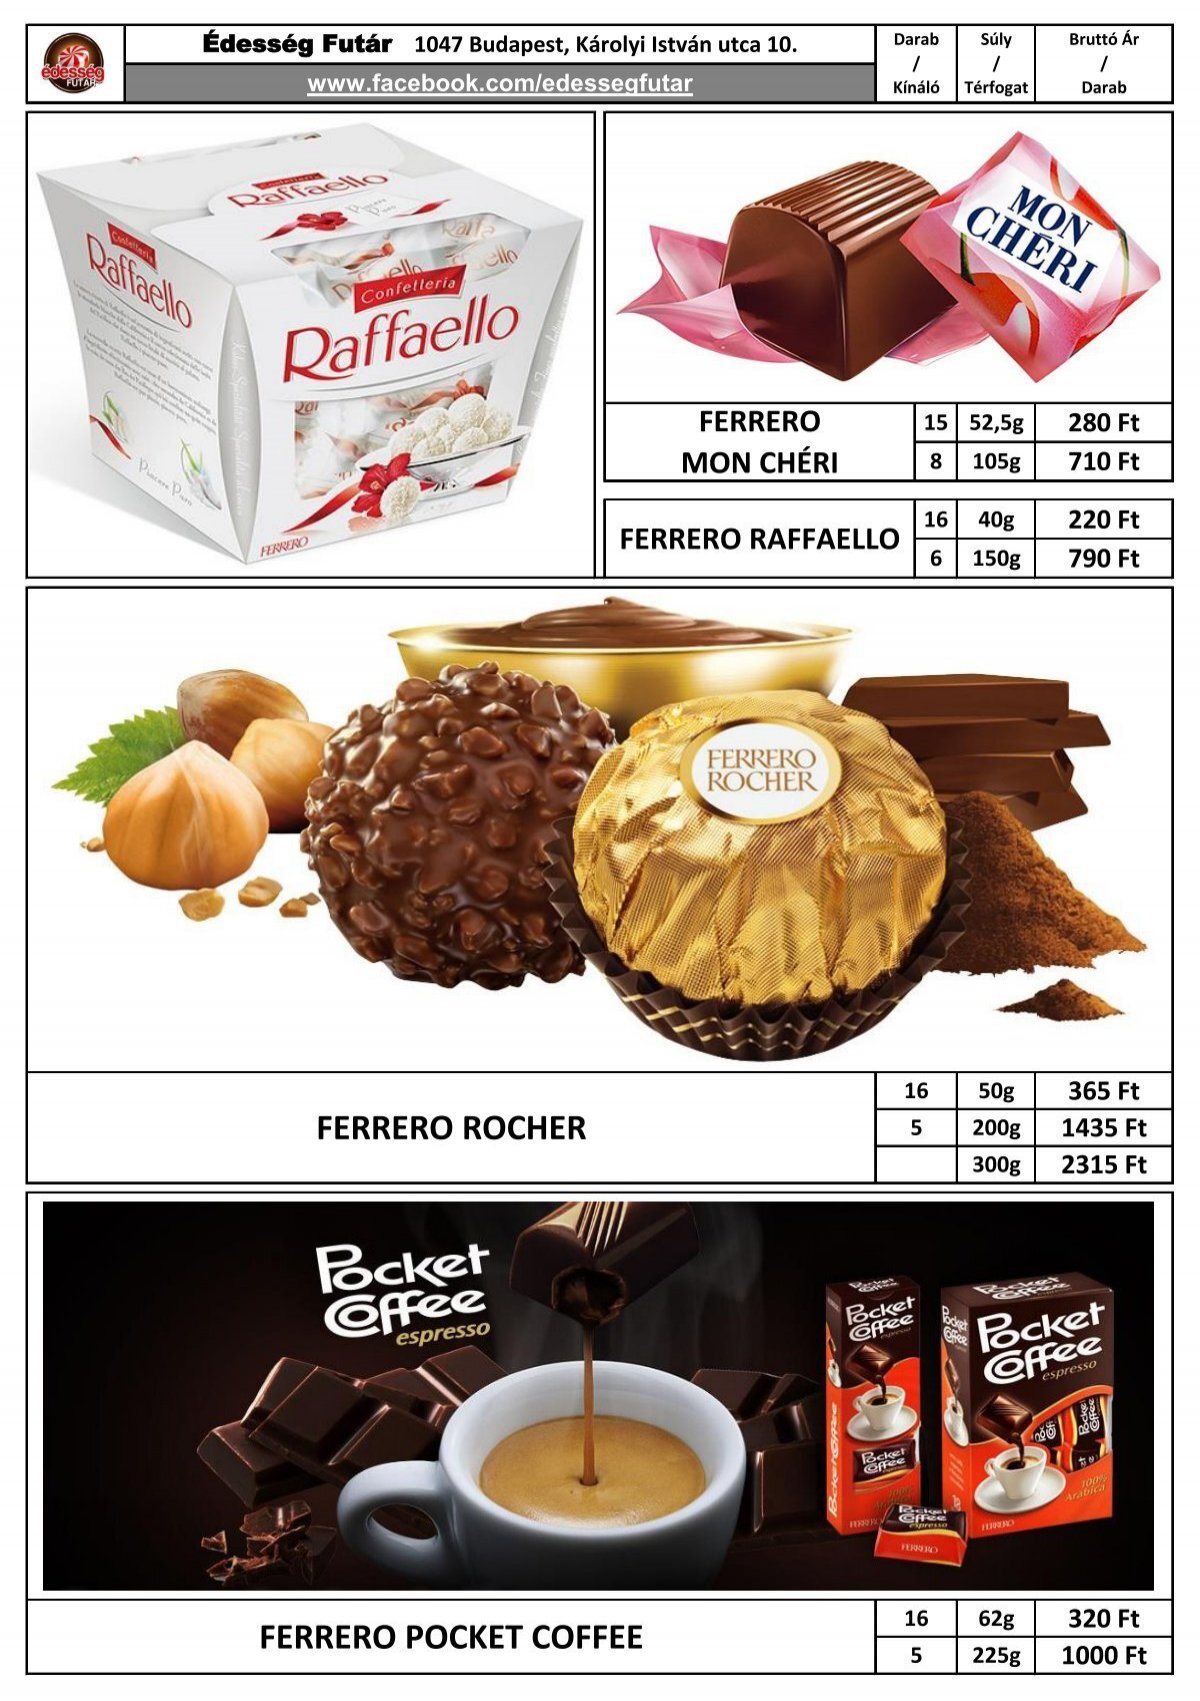 Ferrero Pocket Coffee Espresso chocolates 5 pieces 62g